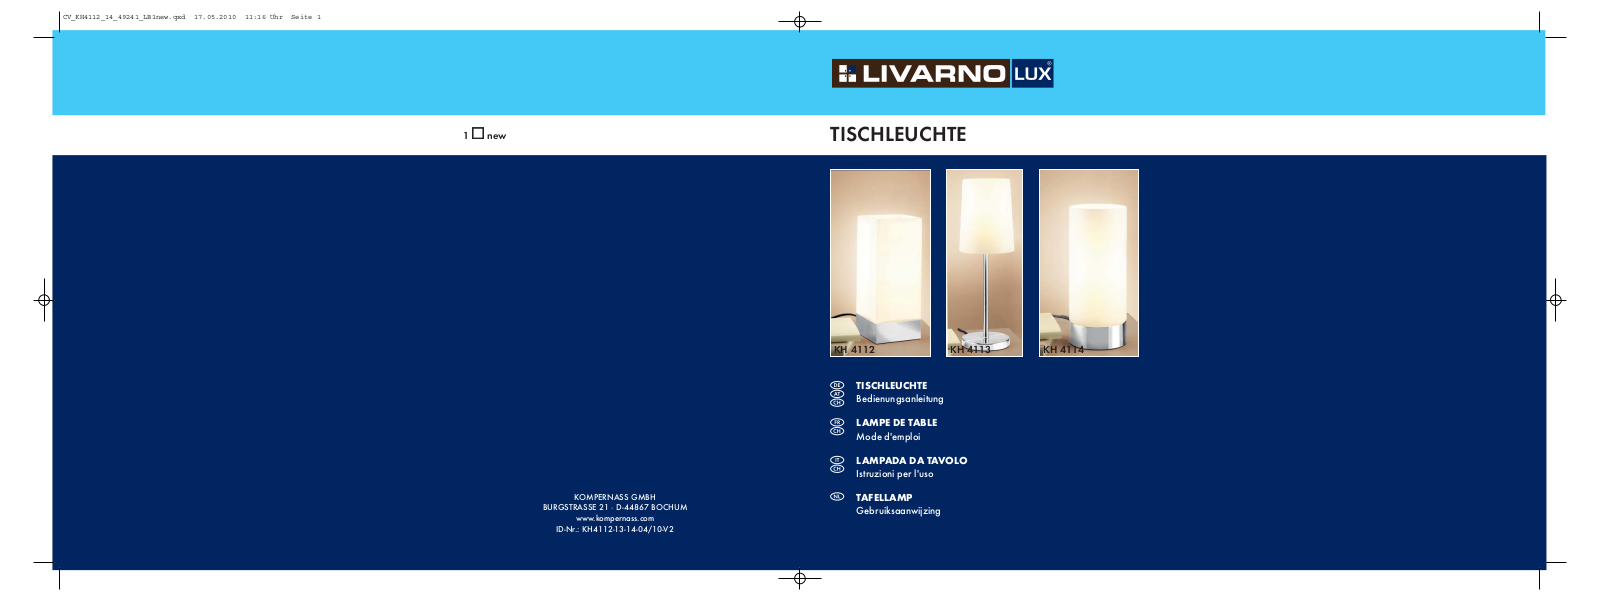 LIVARNO KH 4112-4114 TABLE LAMP User Manual